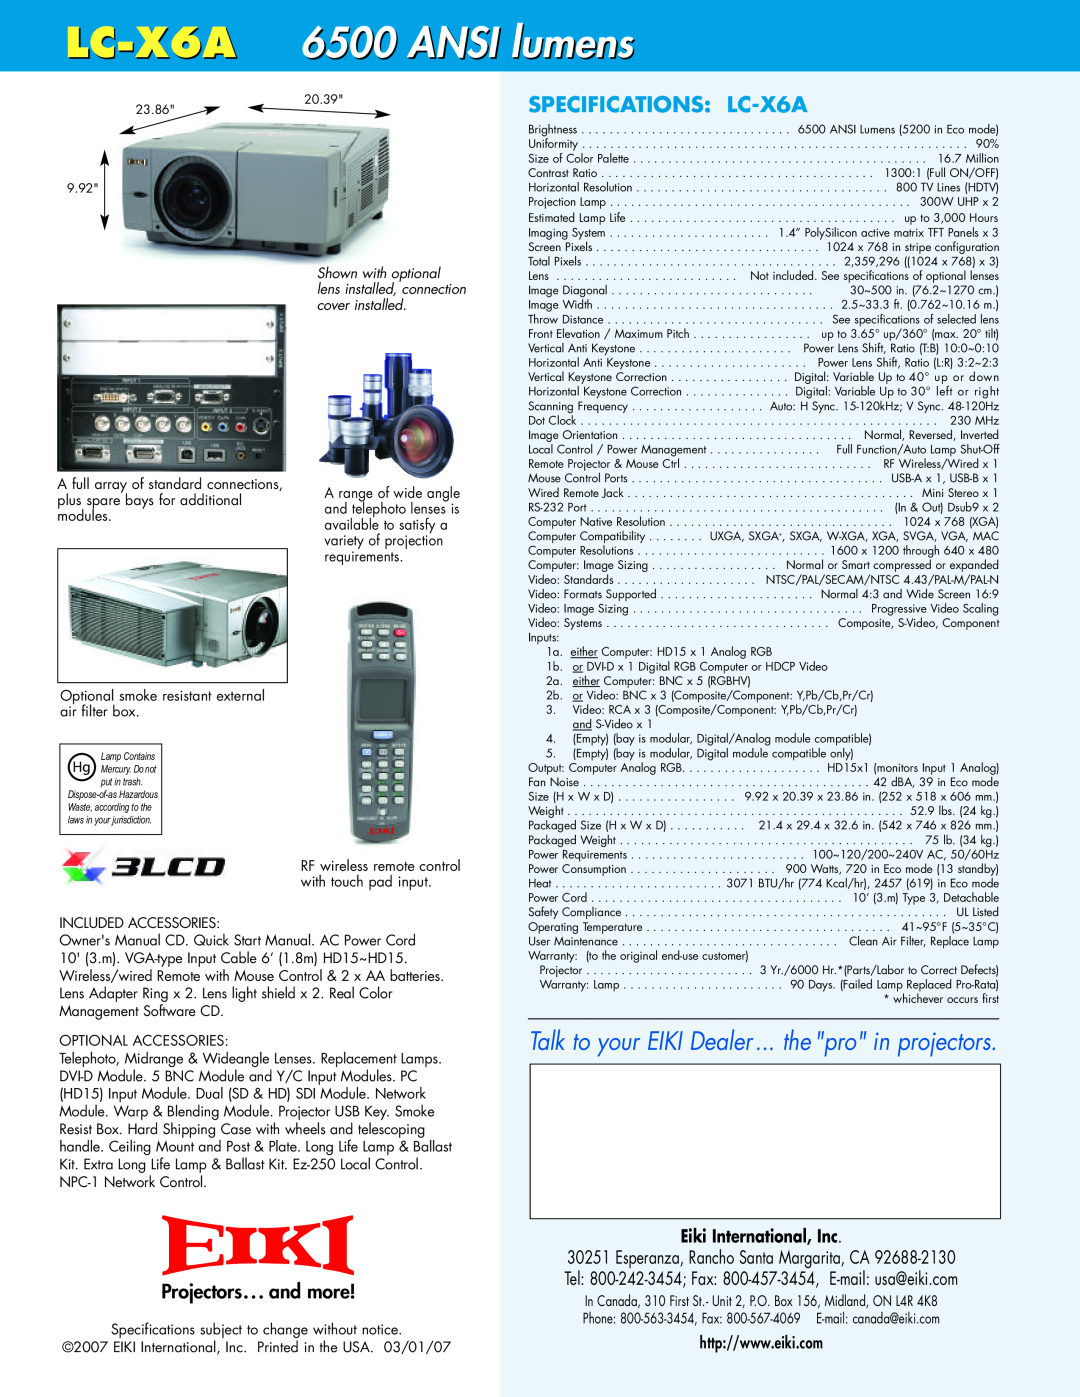 Eiki XGA warranty 2345, LC-X6A 6500 ANSI lumens, SPECIFICATIONS LC-X6A, Projectors... and more, Eiki International, Inc 